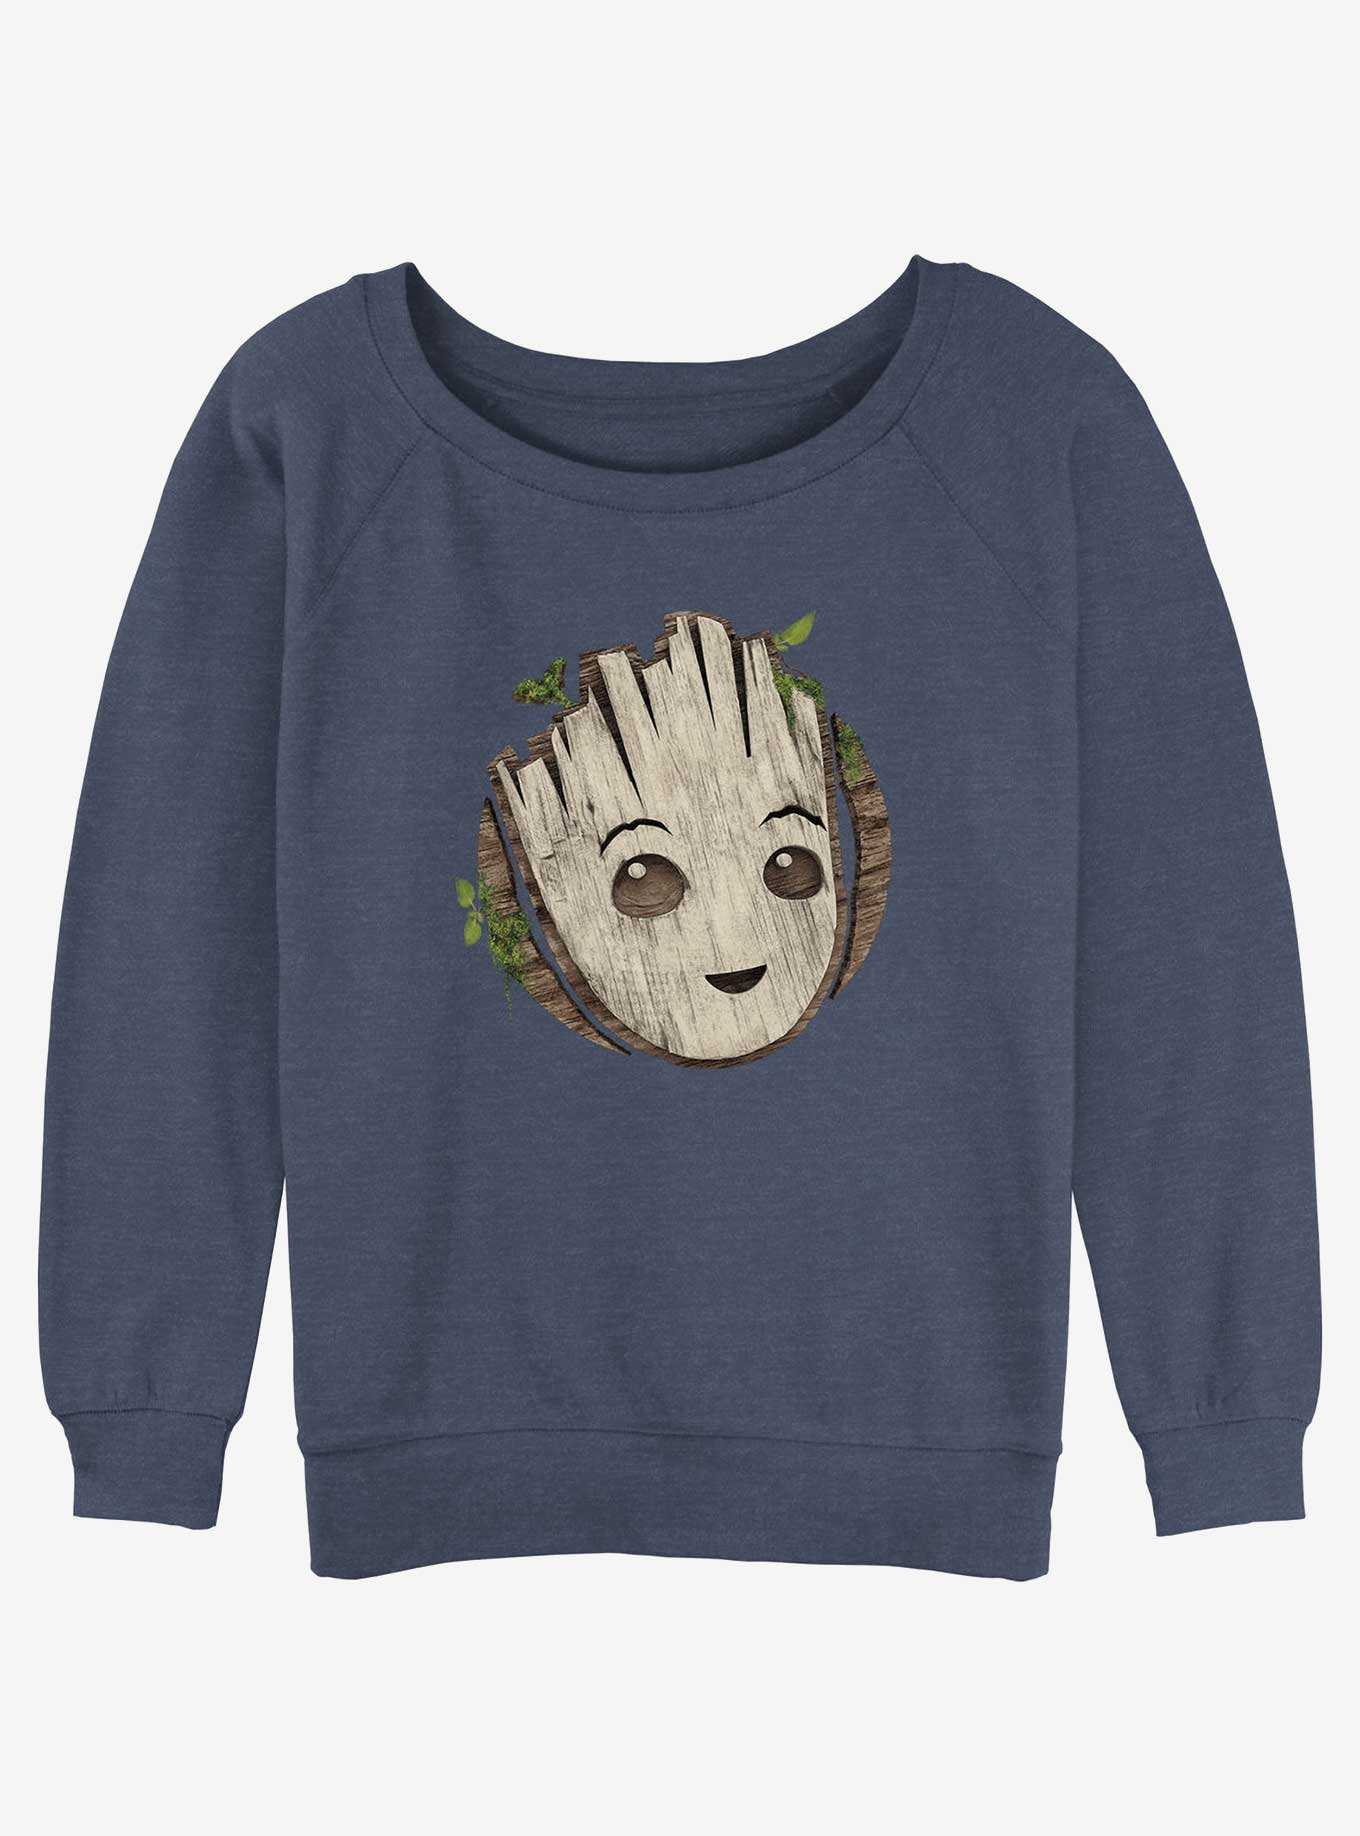 Marvel Guardians of the Galaxy Groot Wooden Badge Girls Slouchy Sweatshirt, , hi-res